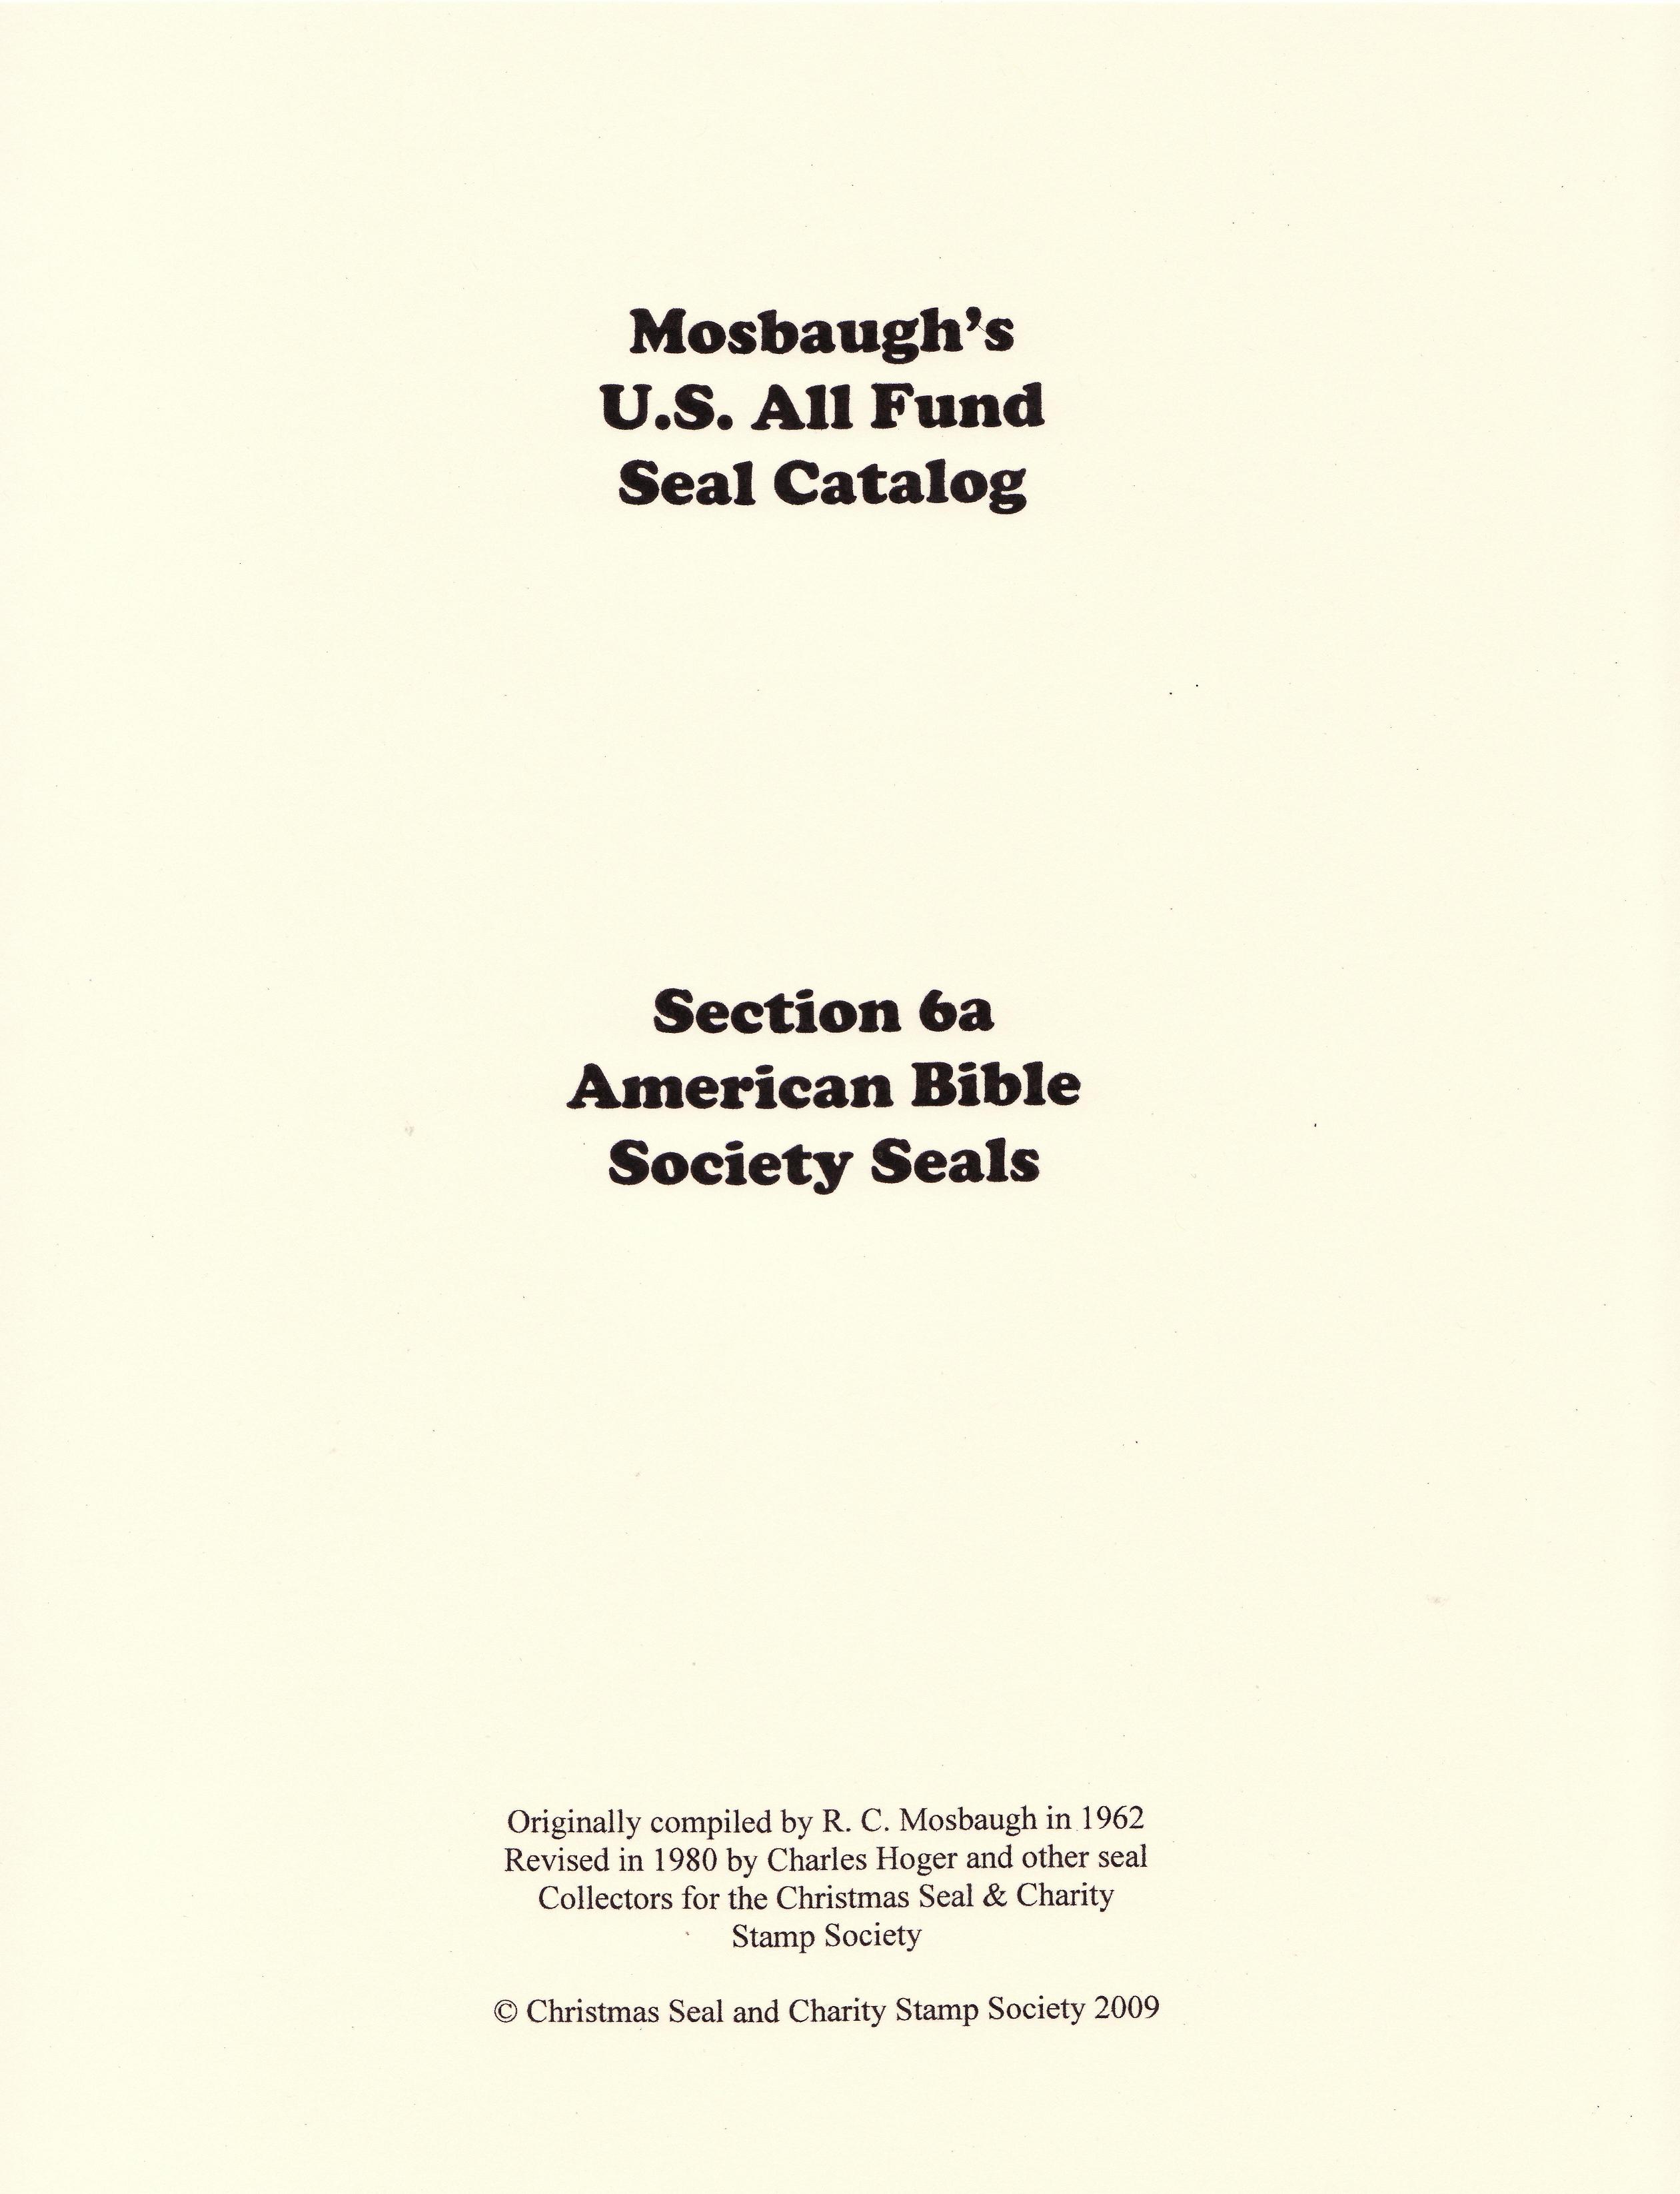 Mosbaugh's Catalog, Sec. 6A, American Bible Charity Seals, 1962 ed. Rev. 1980